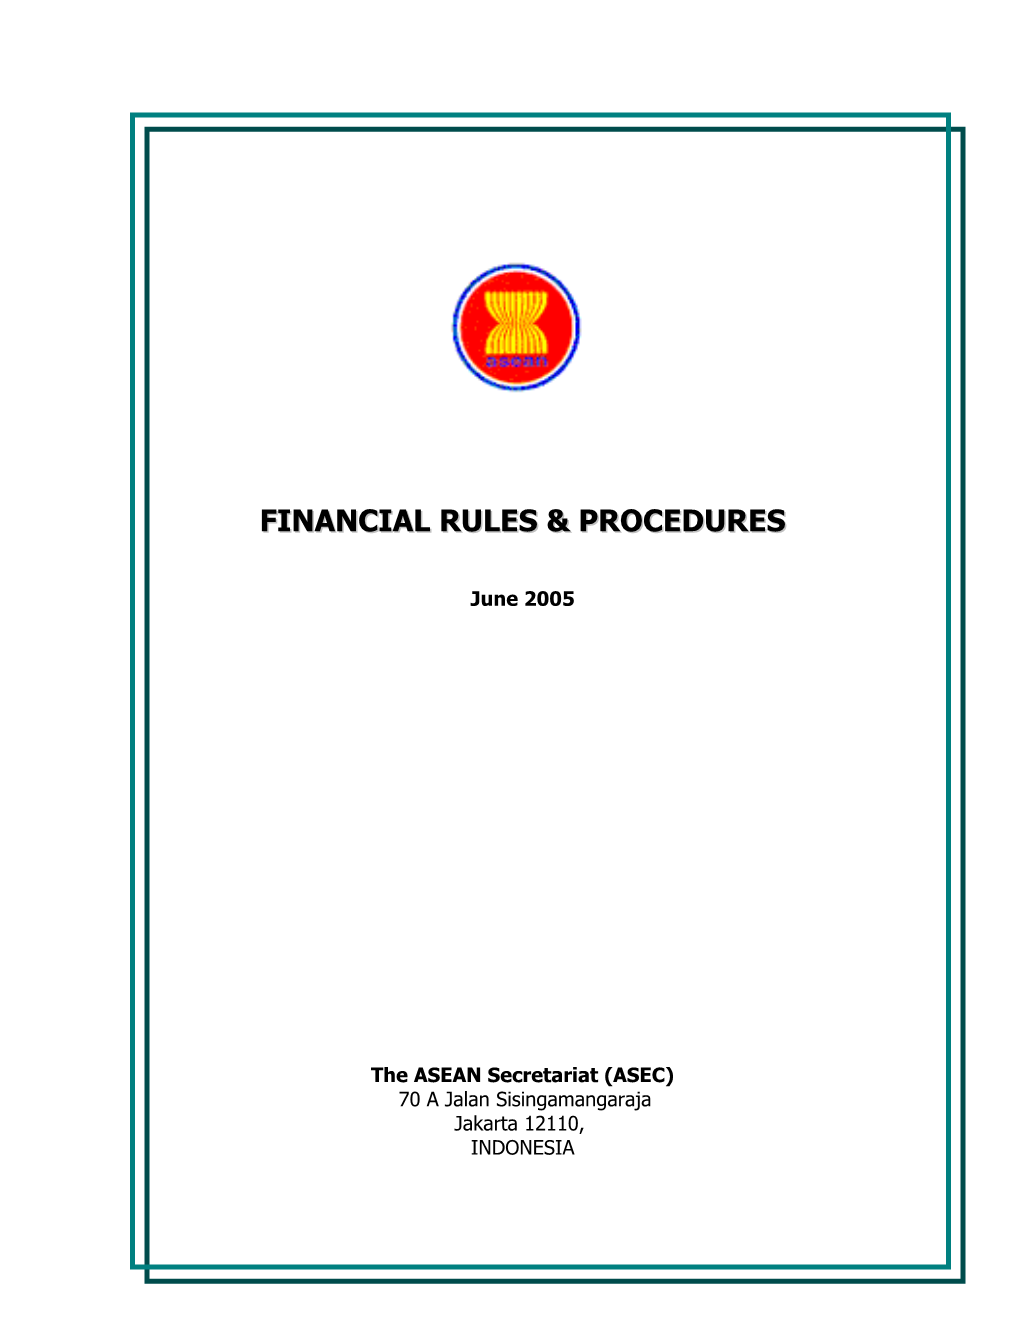 The ASEAN Secretariat Financial Rules & Procedures Manual Version 1.0